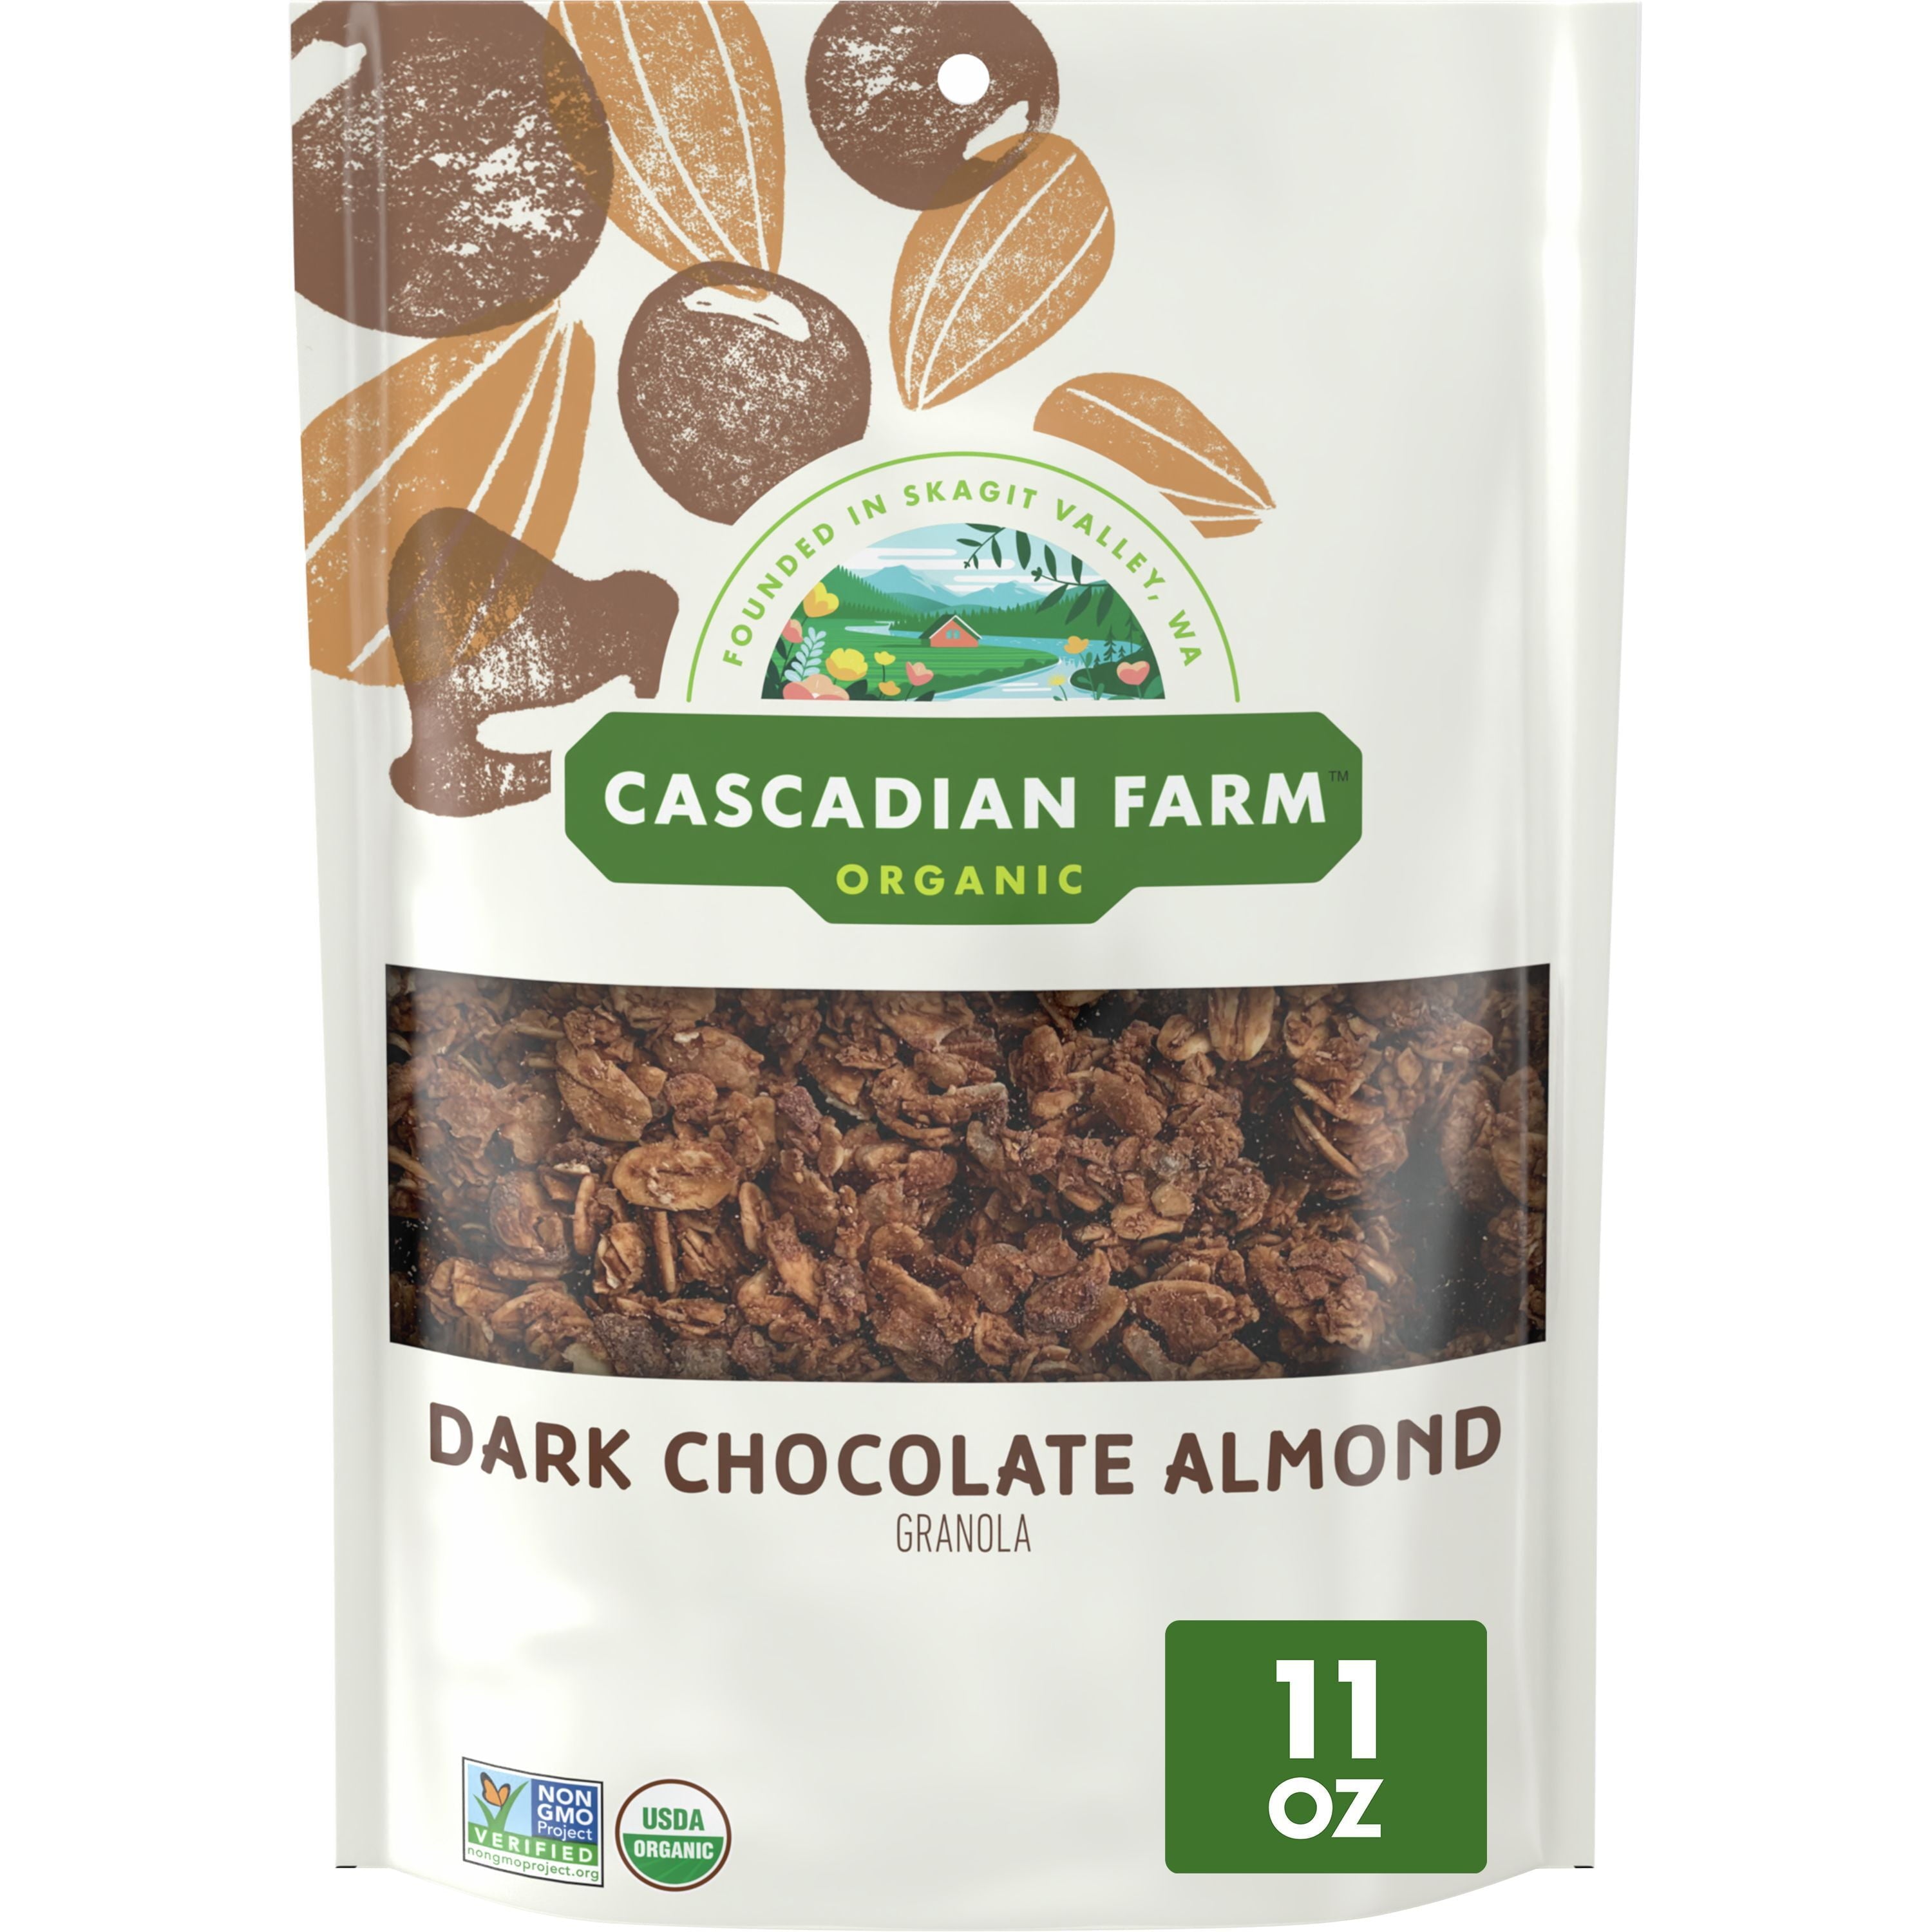 Cascadian Farm Organic Granola Dark Chocolate Almond Cereal Resealable 11 Oz Pouch